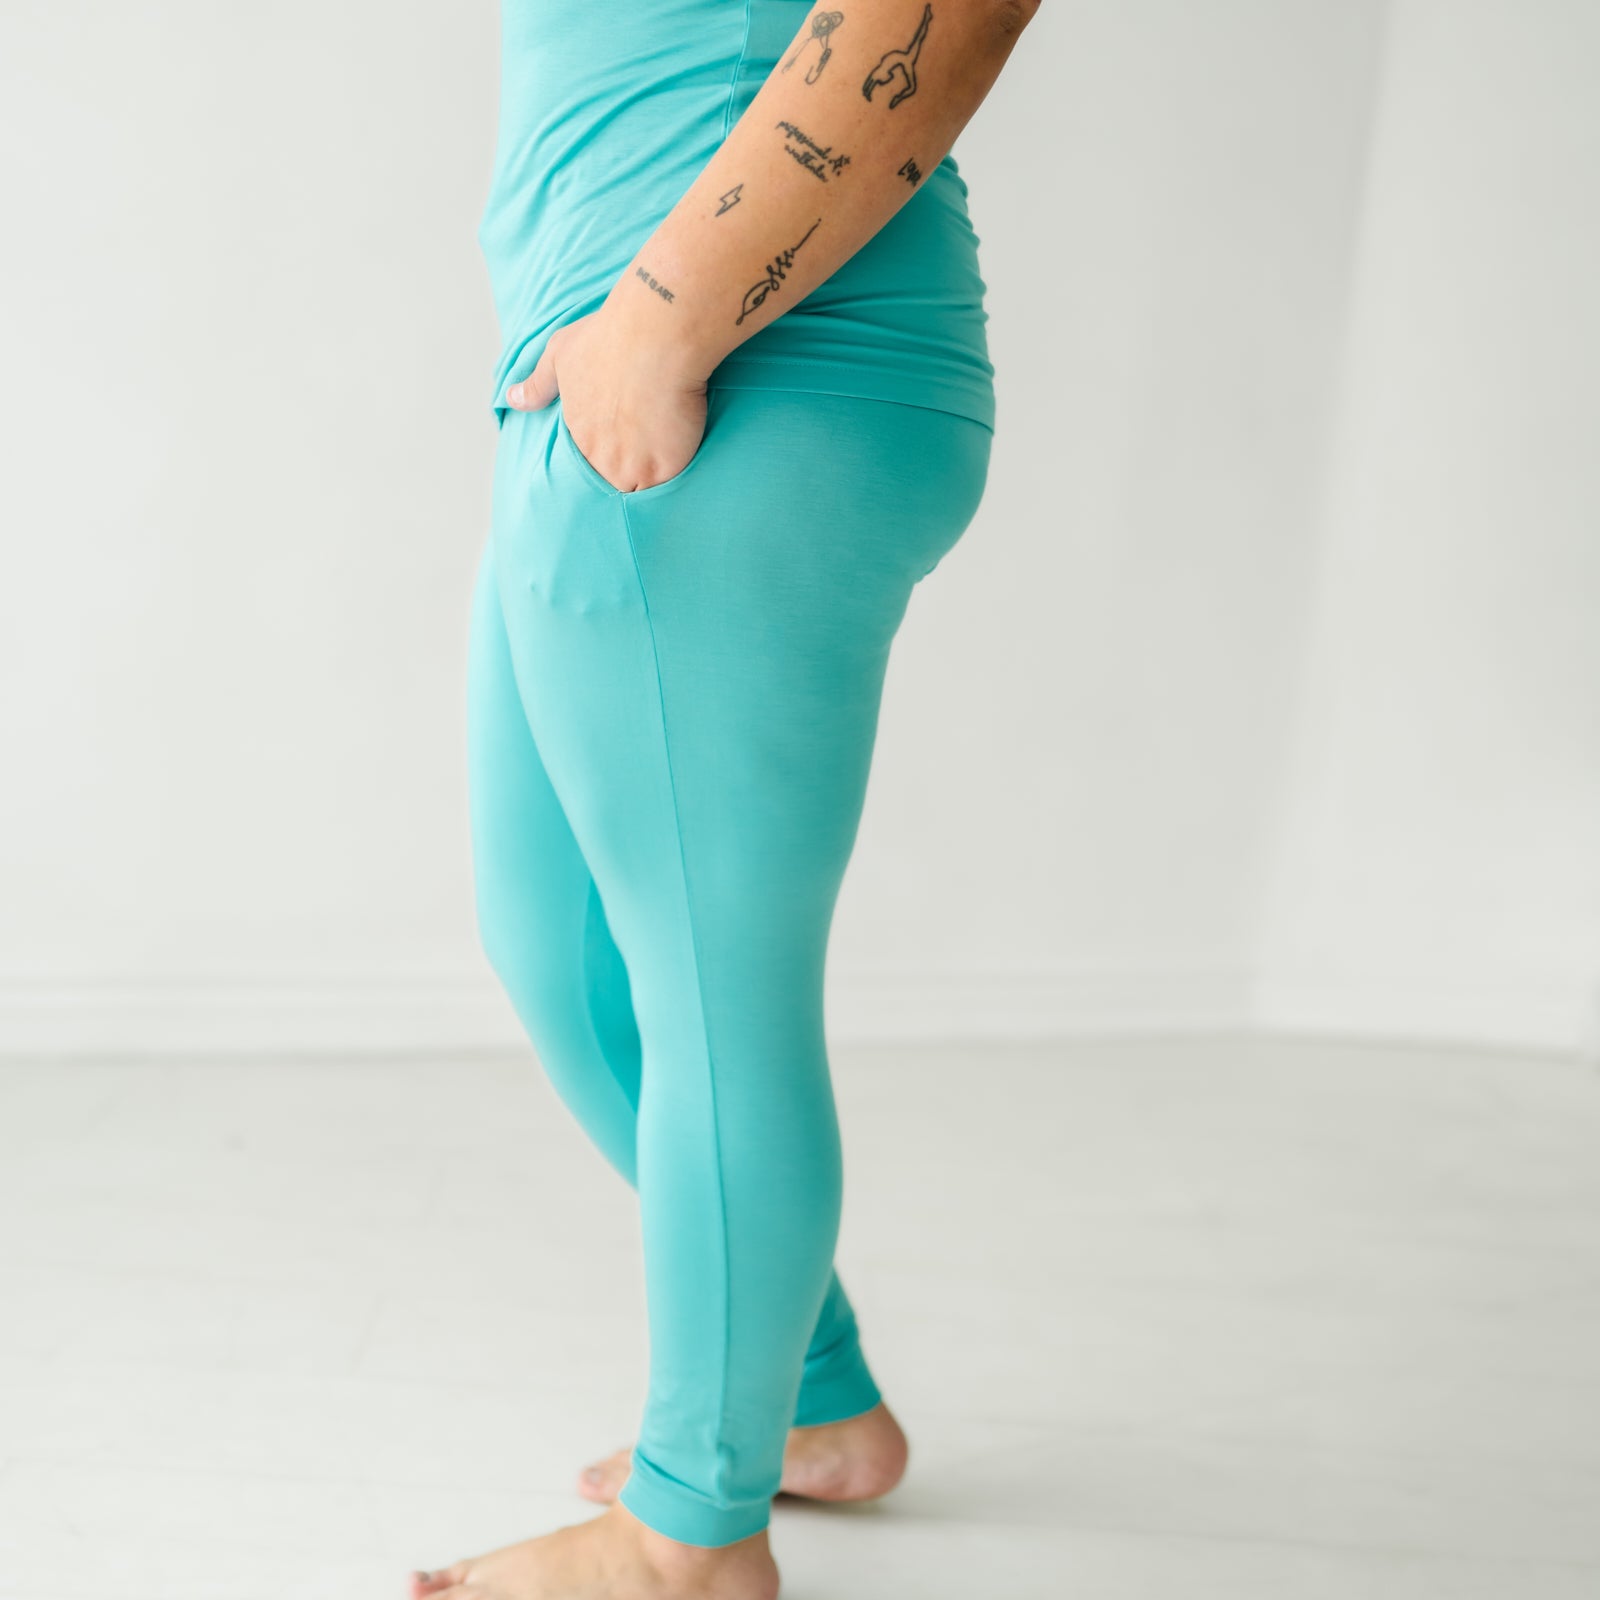 Profile image of a woman wearing Glacier Turquoise women's pajama pants